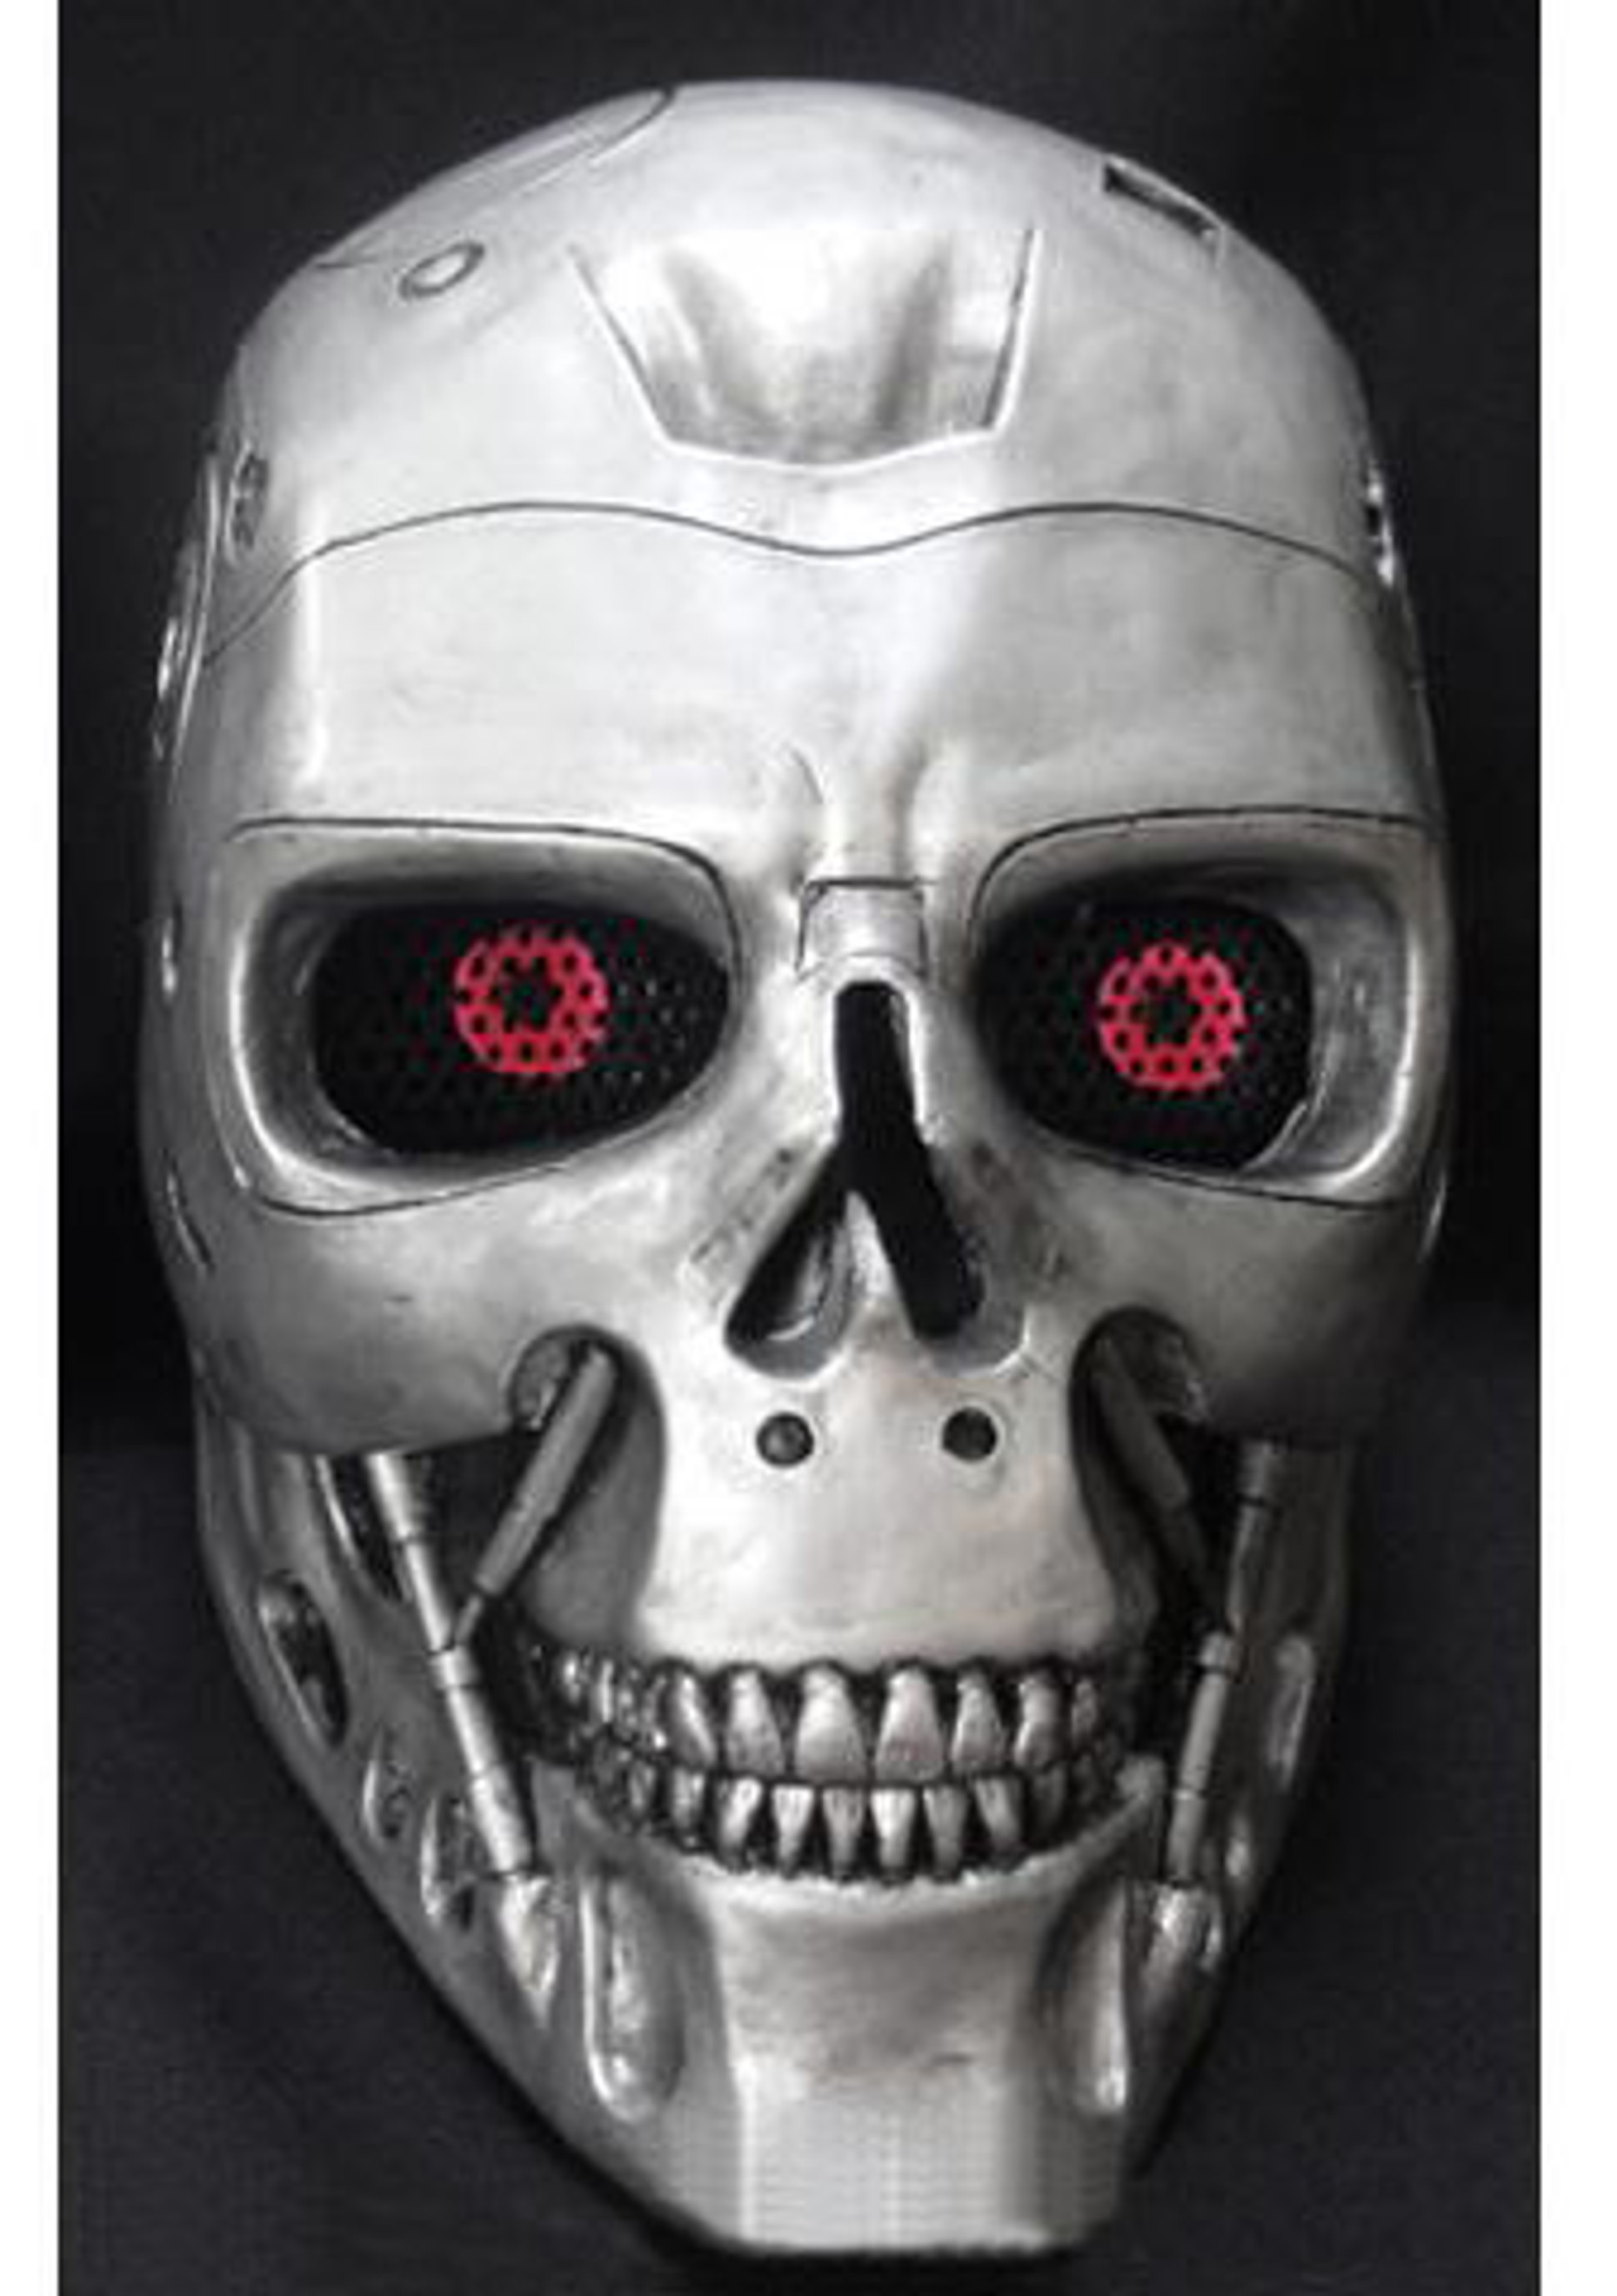 FMA Custom Fiberglass Wire Mesh "T800" Mask Inspired by Terminator